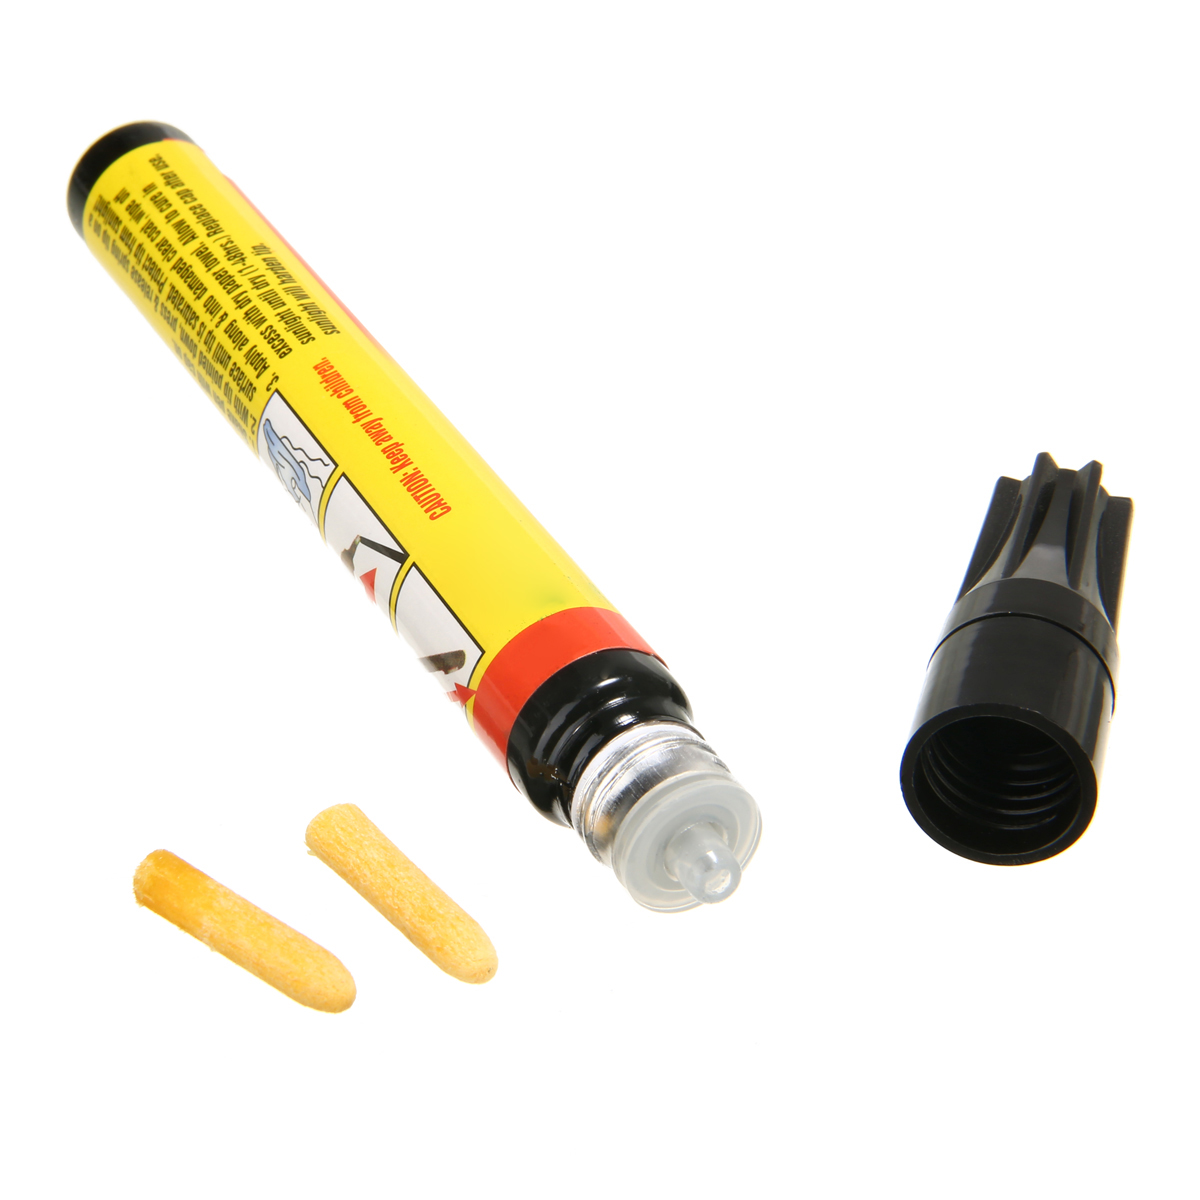 1pcs Universal Car Auto Clean Coat Paint Scratch Repair Remover Pen Applicator Clear Painting Pens Car Tools